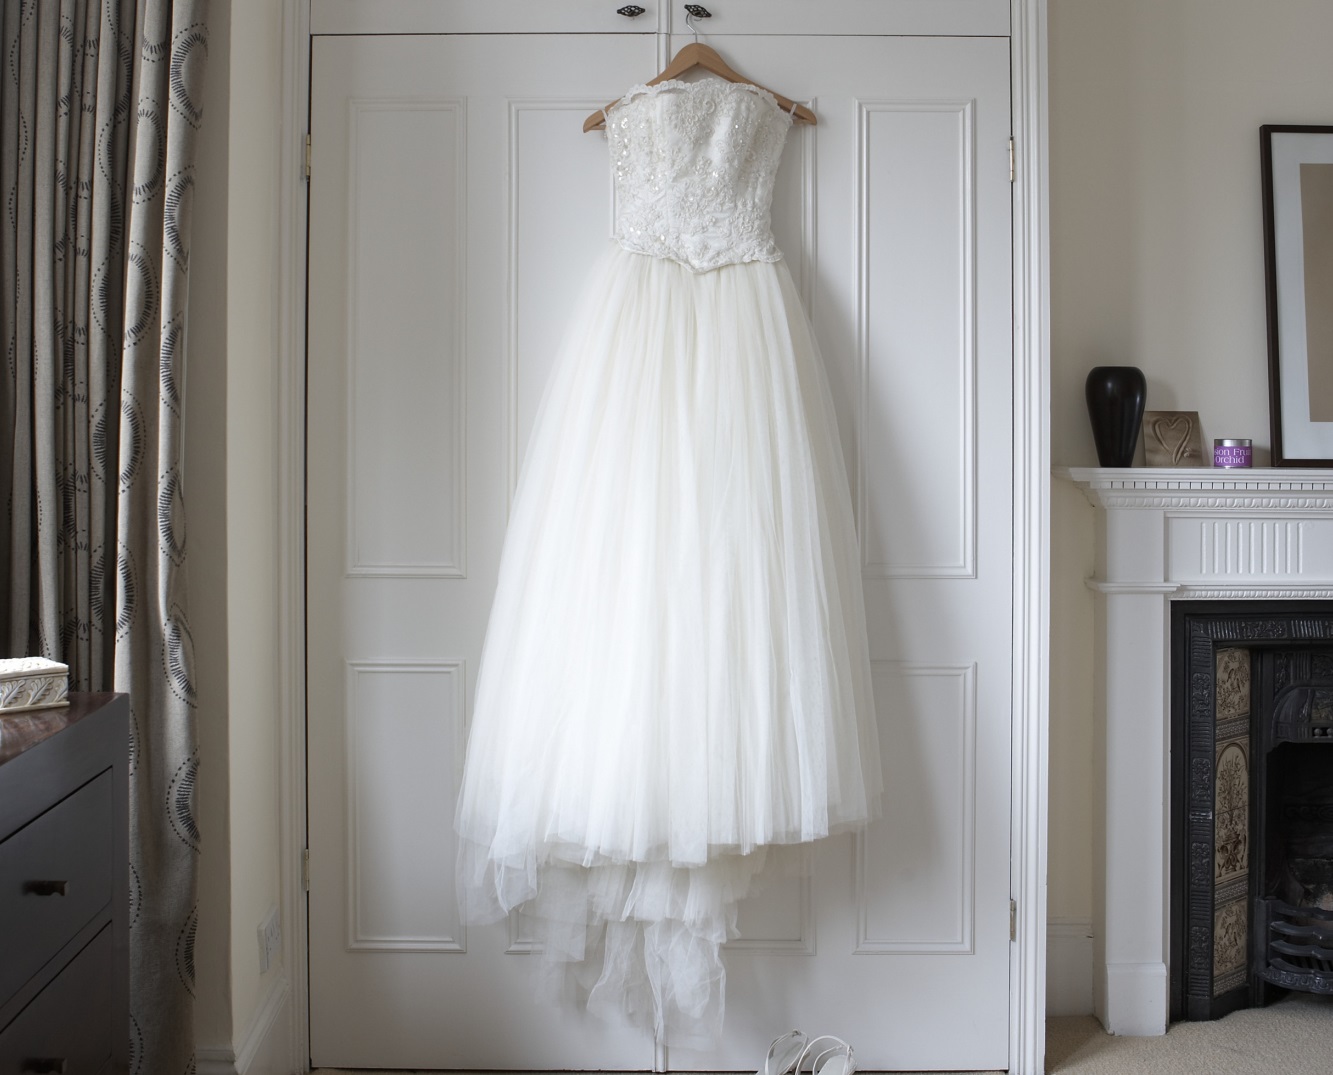 Wedding dress hanging on wardrobe doors, white shoes on floor